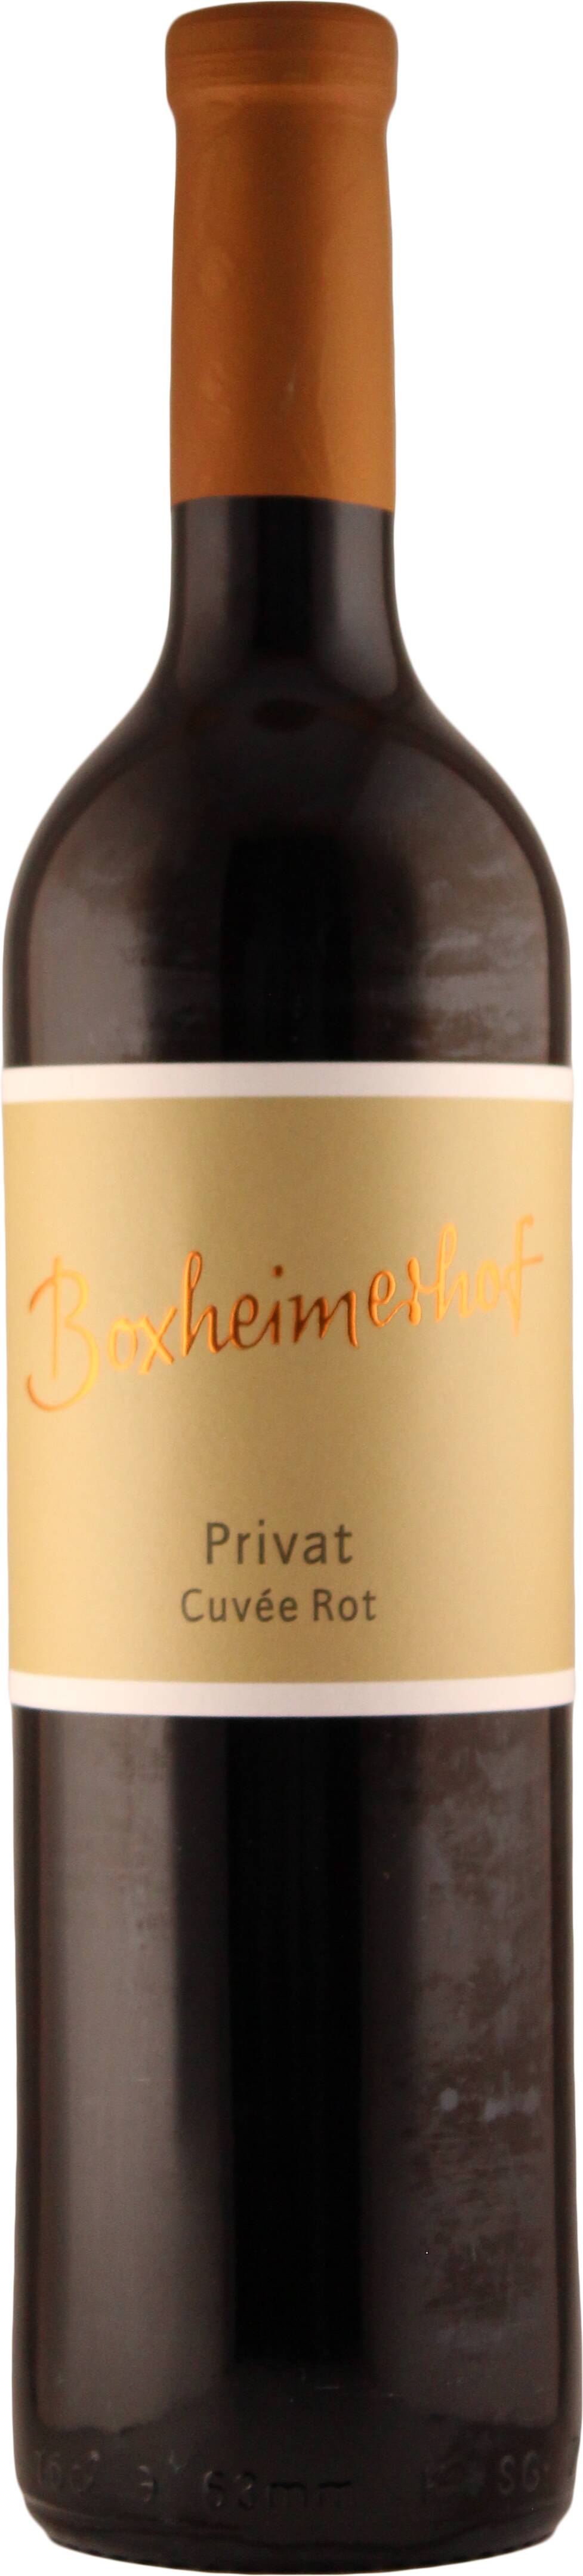 Boxheimer Privat Cuvée Rot